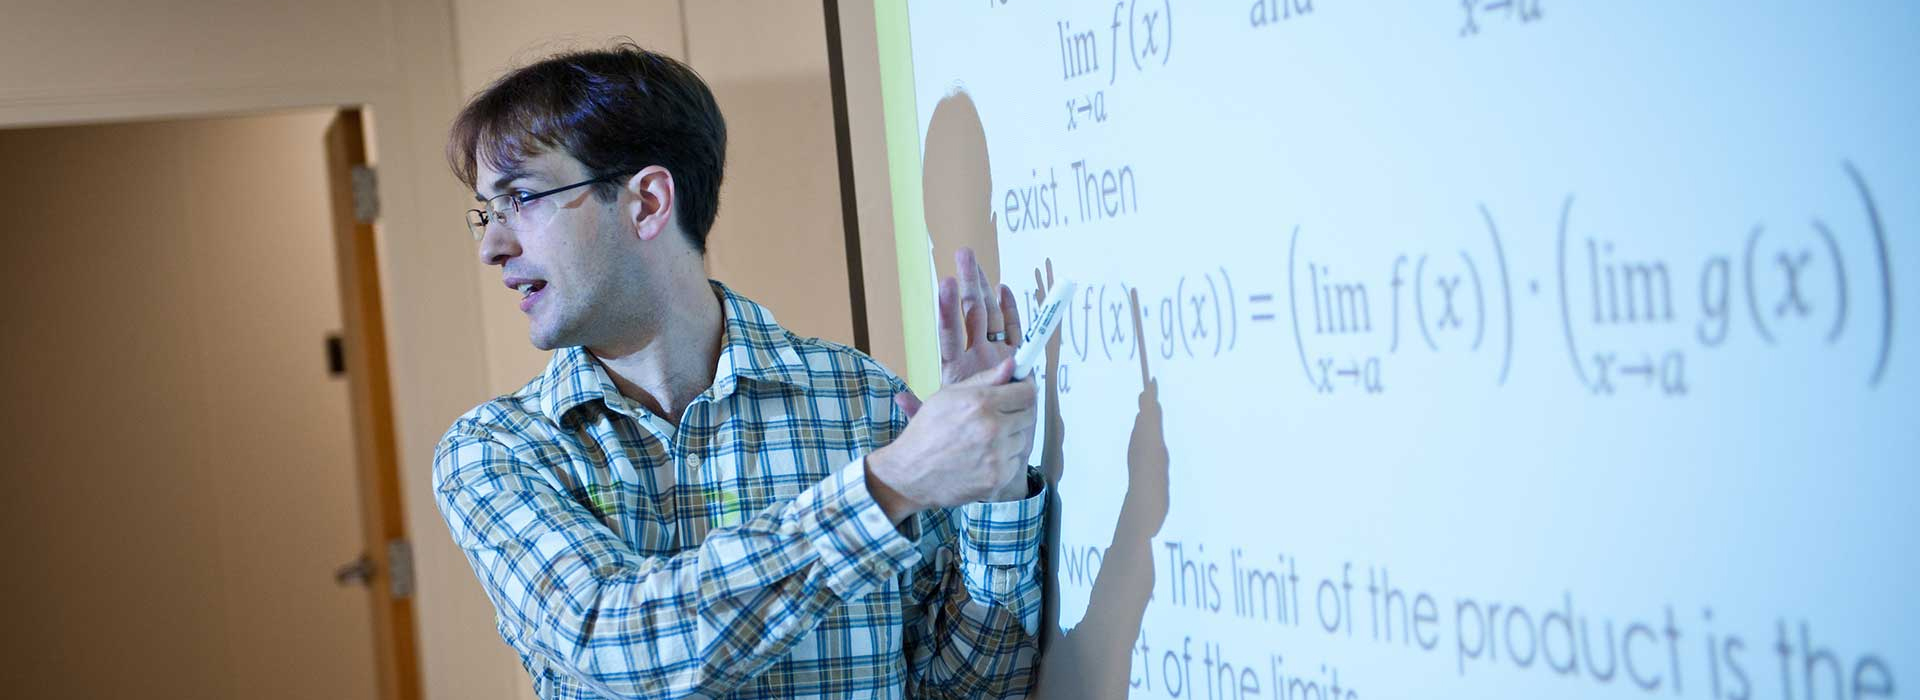 UIS math professor teaching at whiteboard